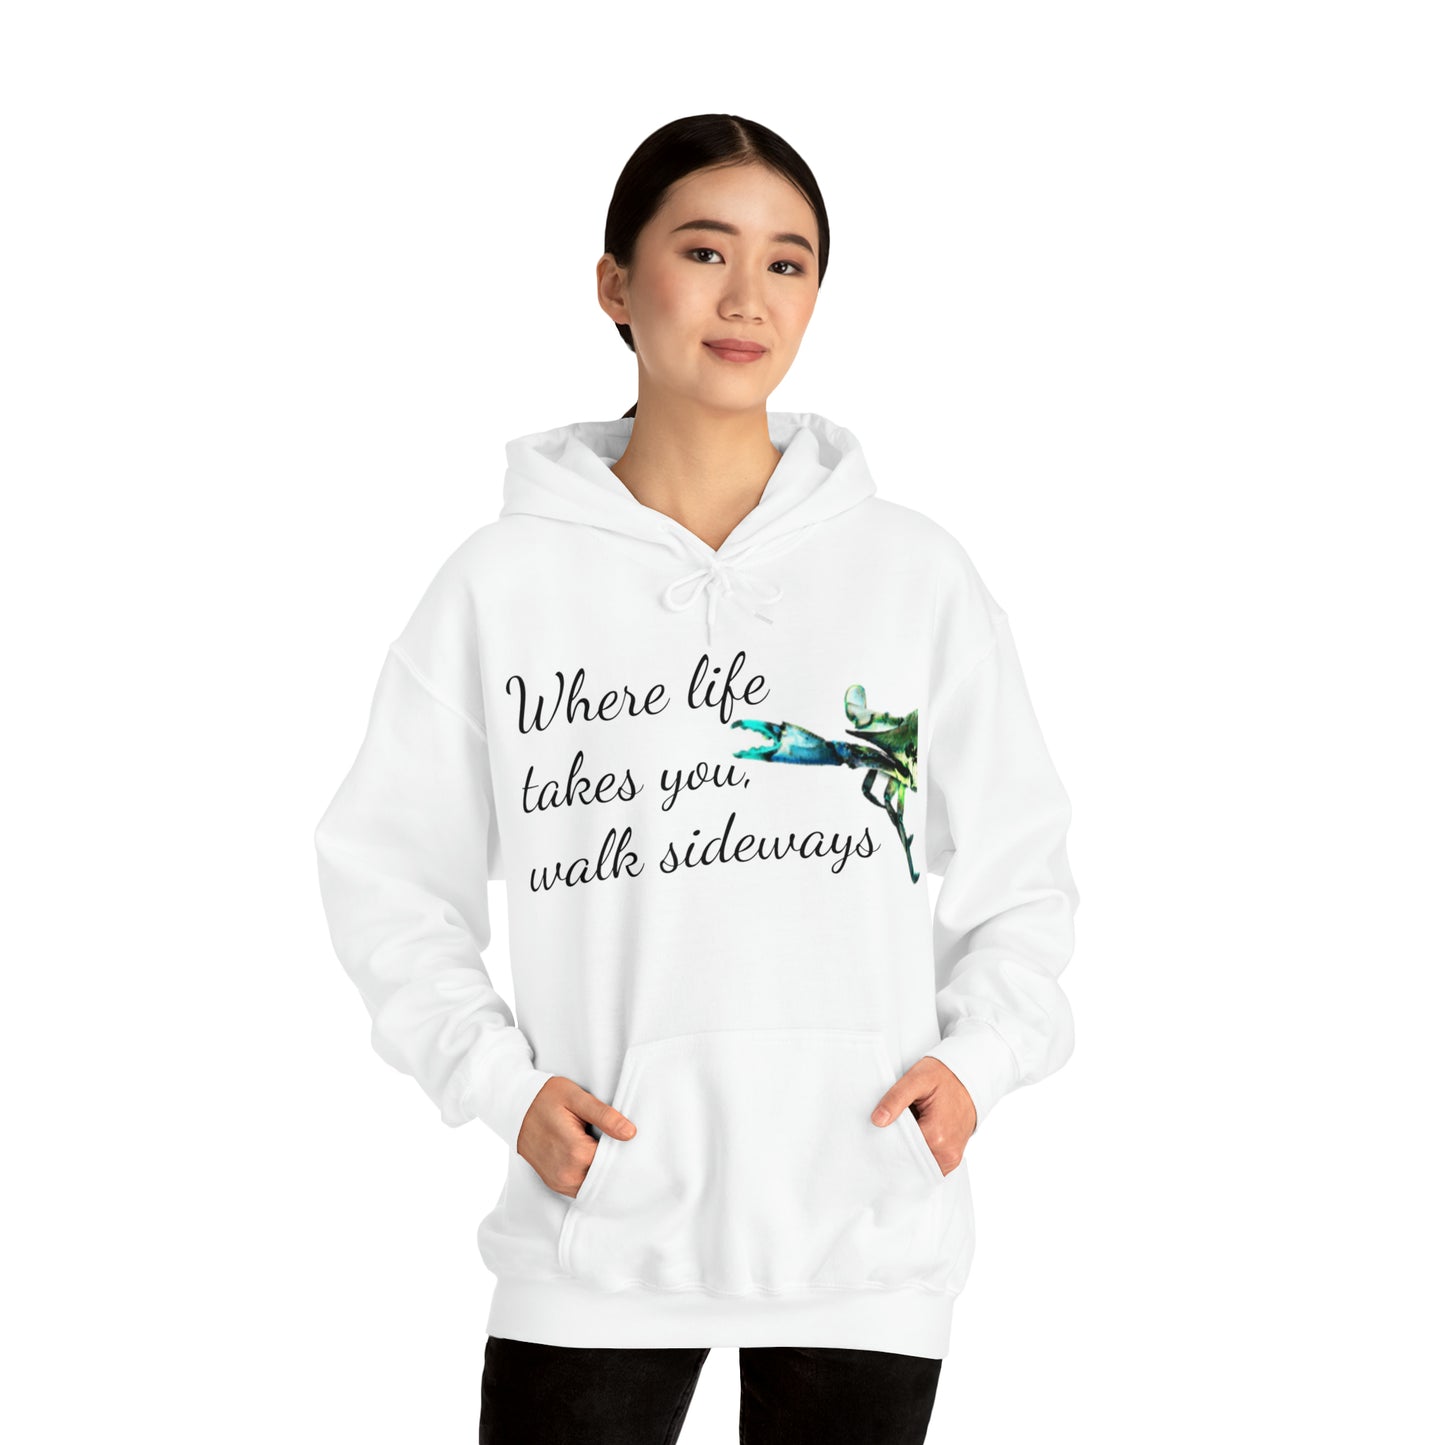 Walk sideways hooded Sweatshirt